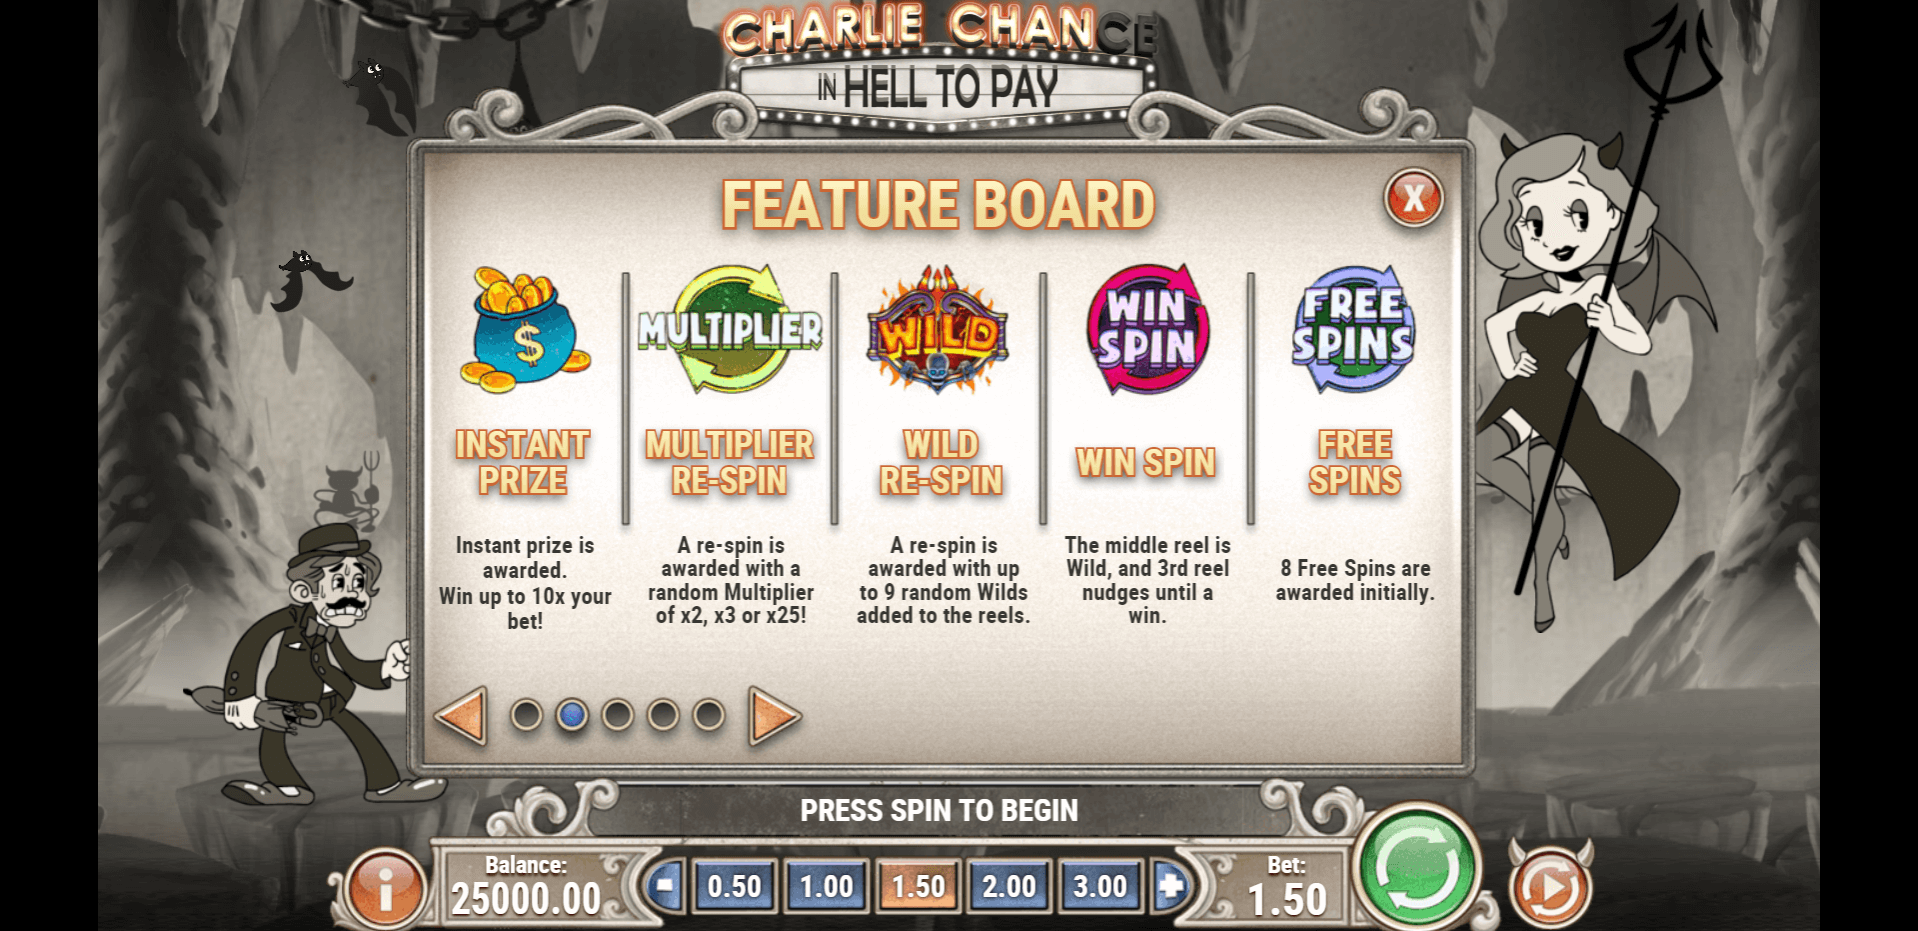 Charlie Chance Slot Machine